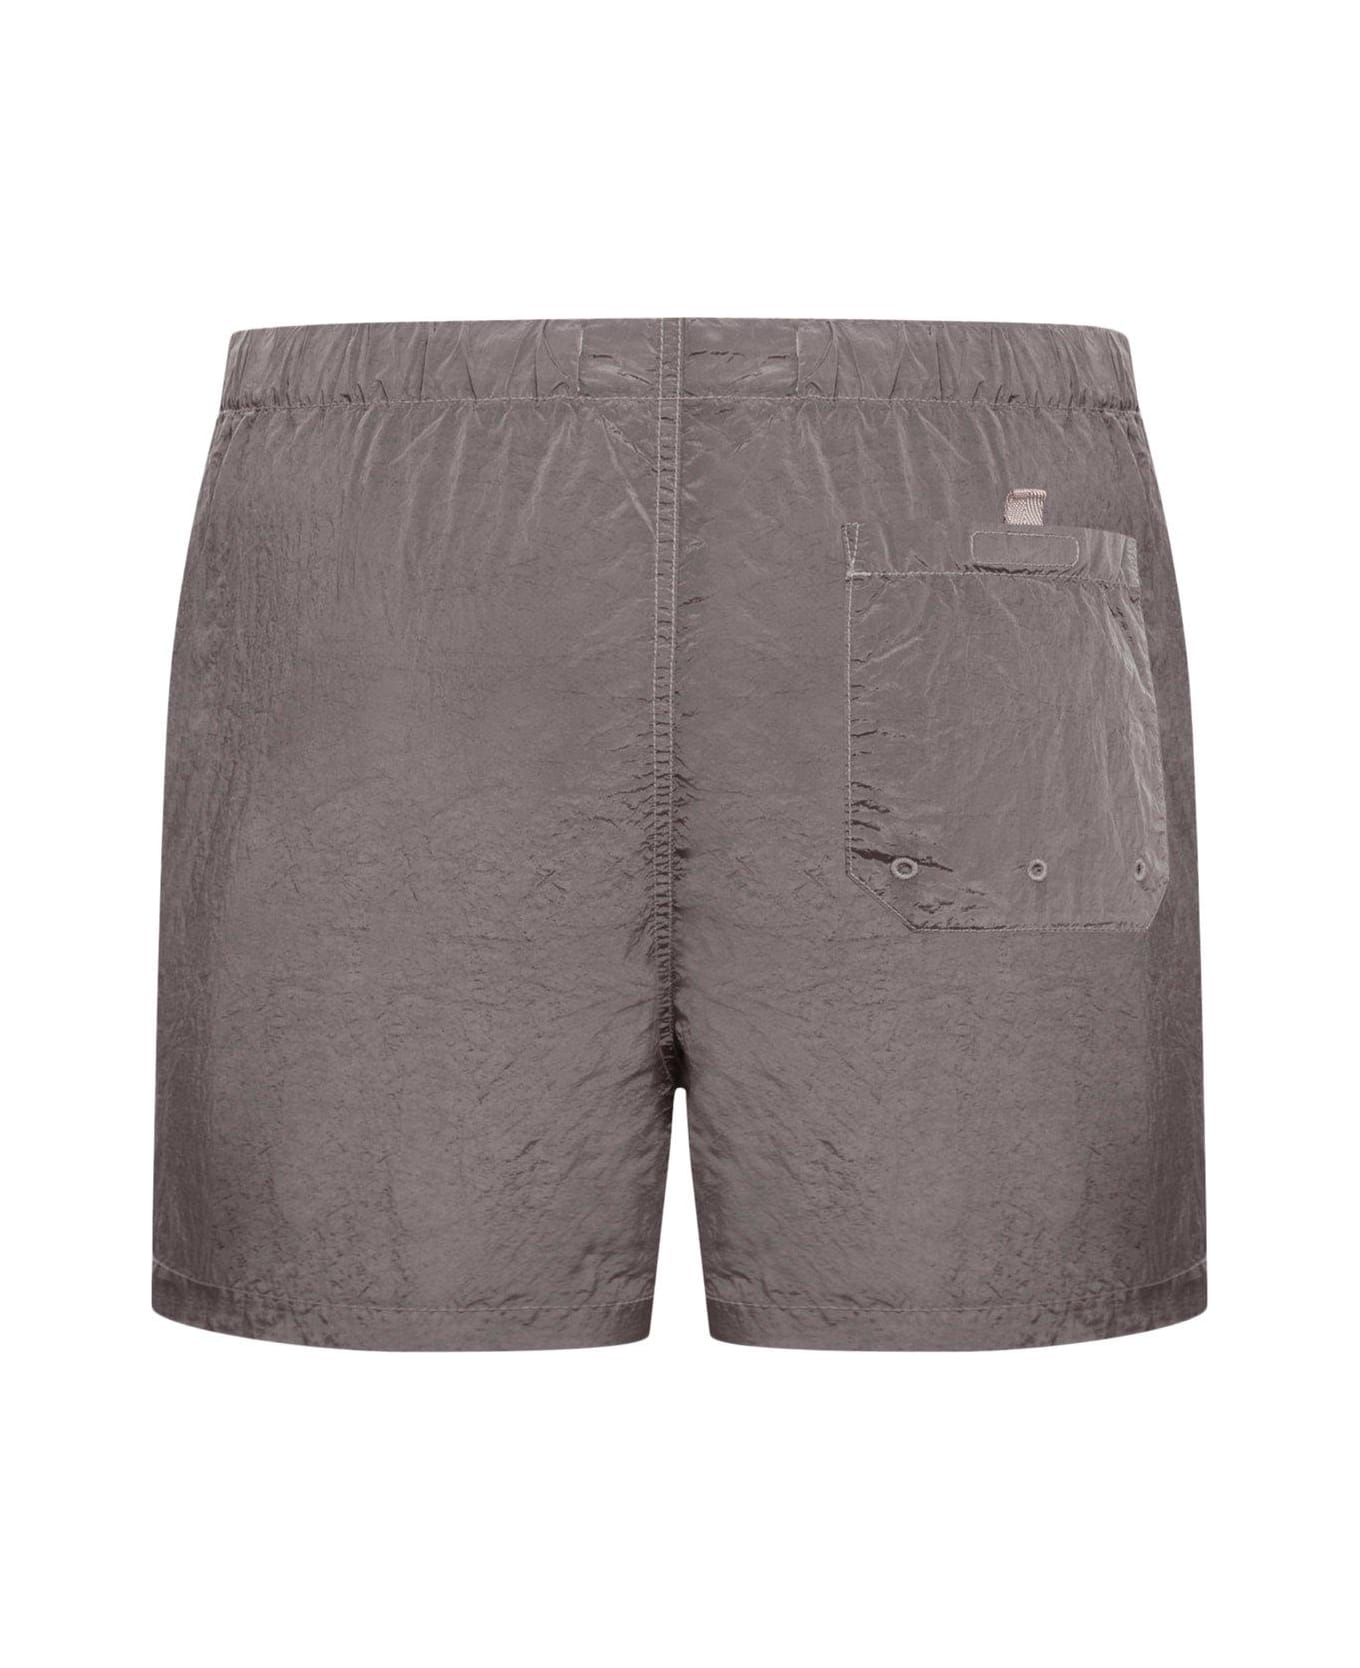 Stone Island Logo Patch Drawstring Shorts - Mud